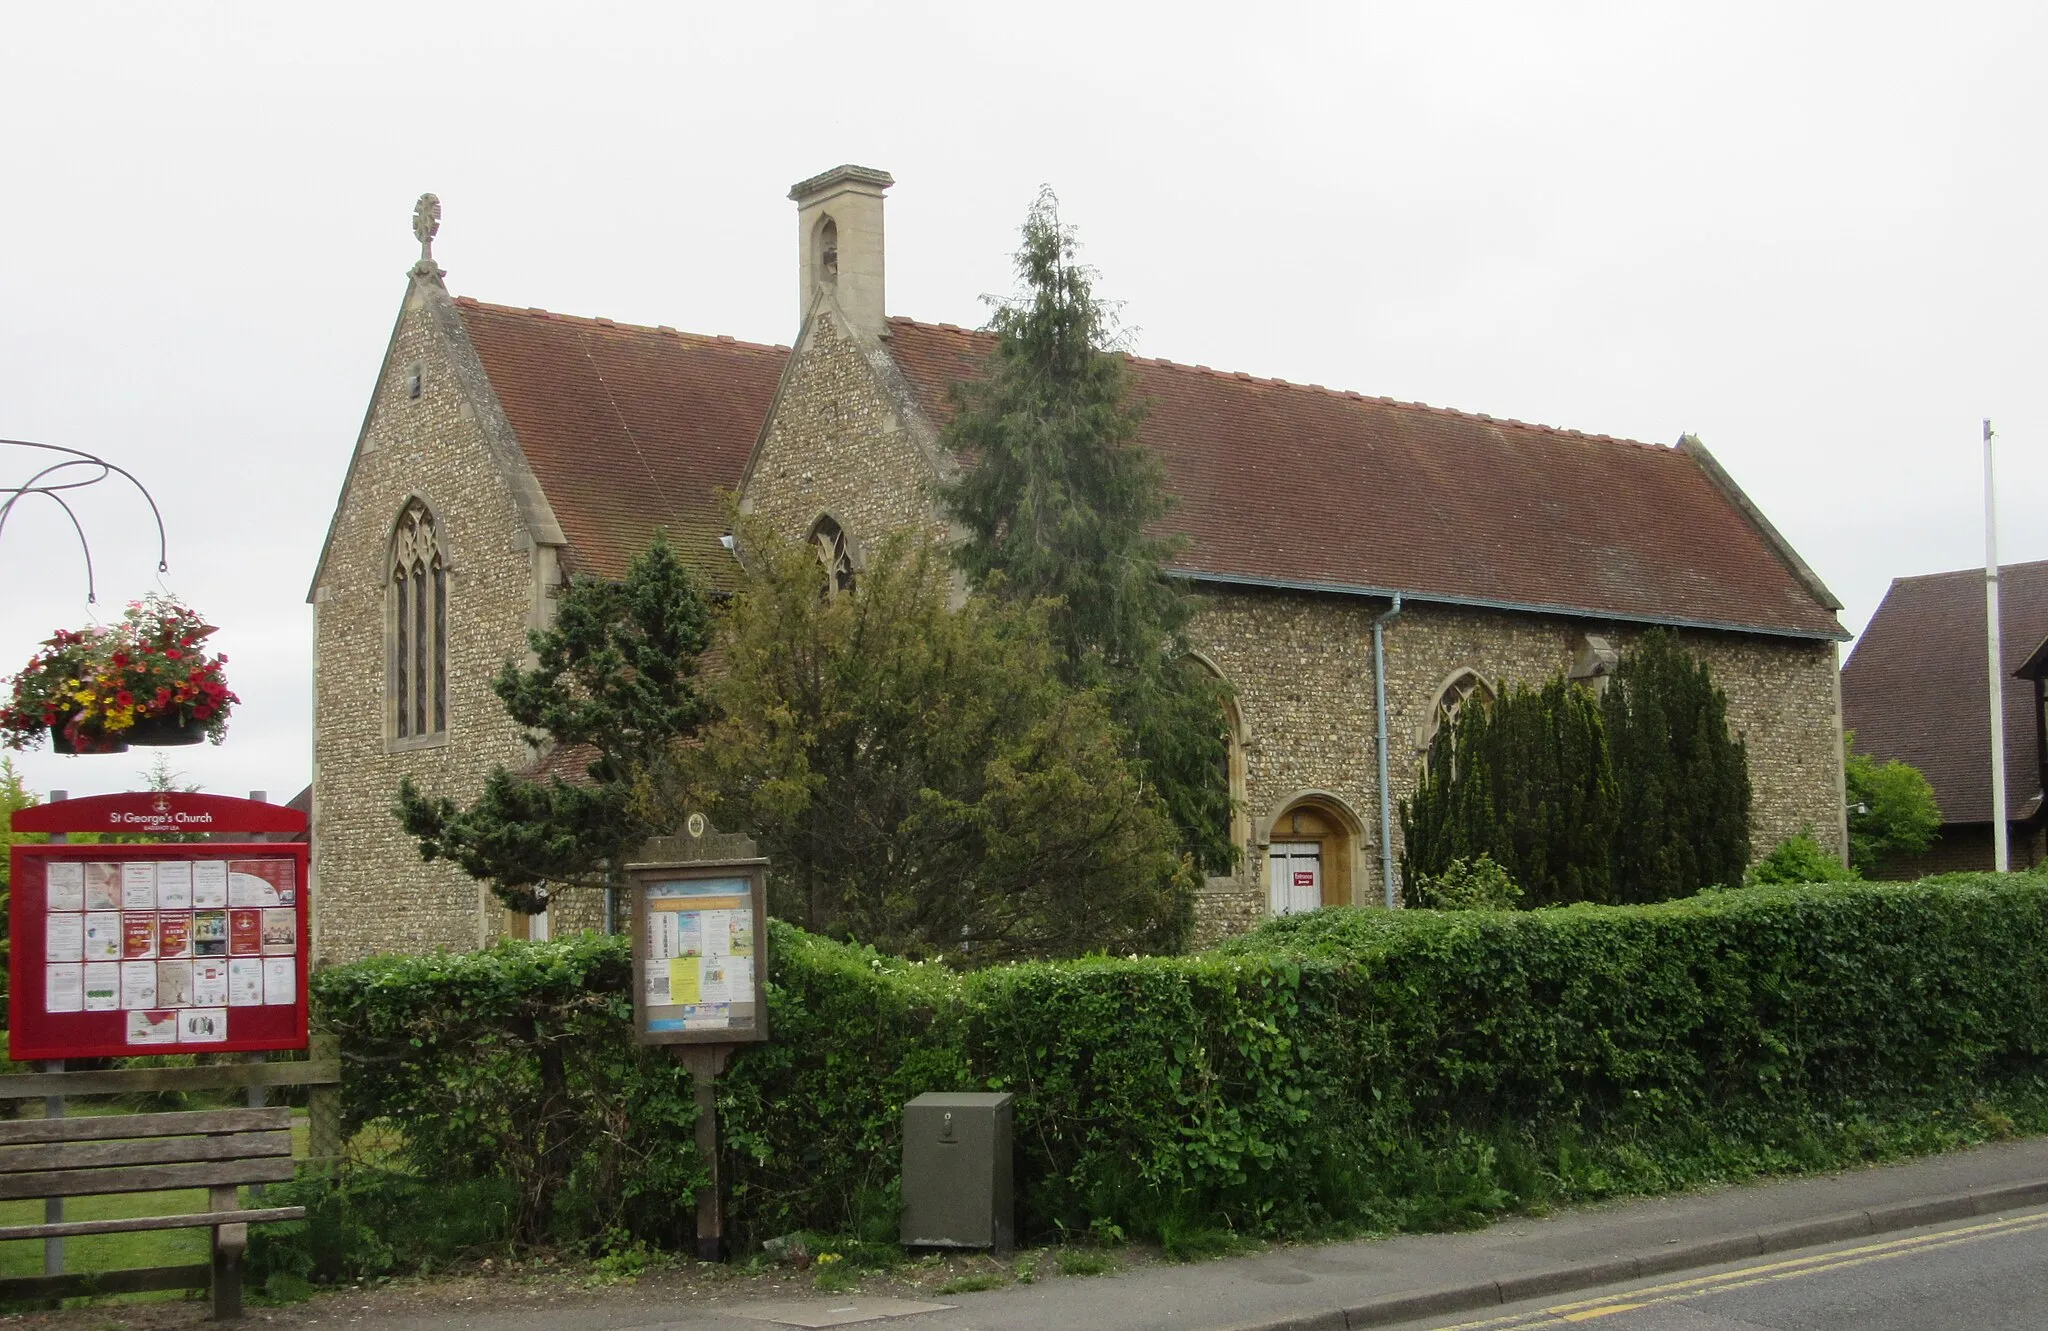 Photo showing: St George's Church, Badshot Lea Road, Badshot Lea, Borough of Waverley, Surrey, England.